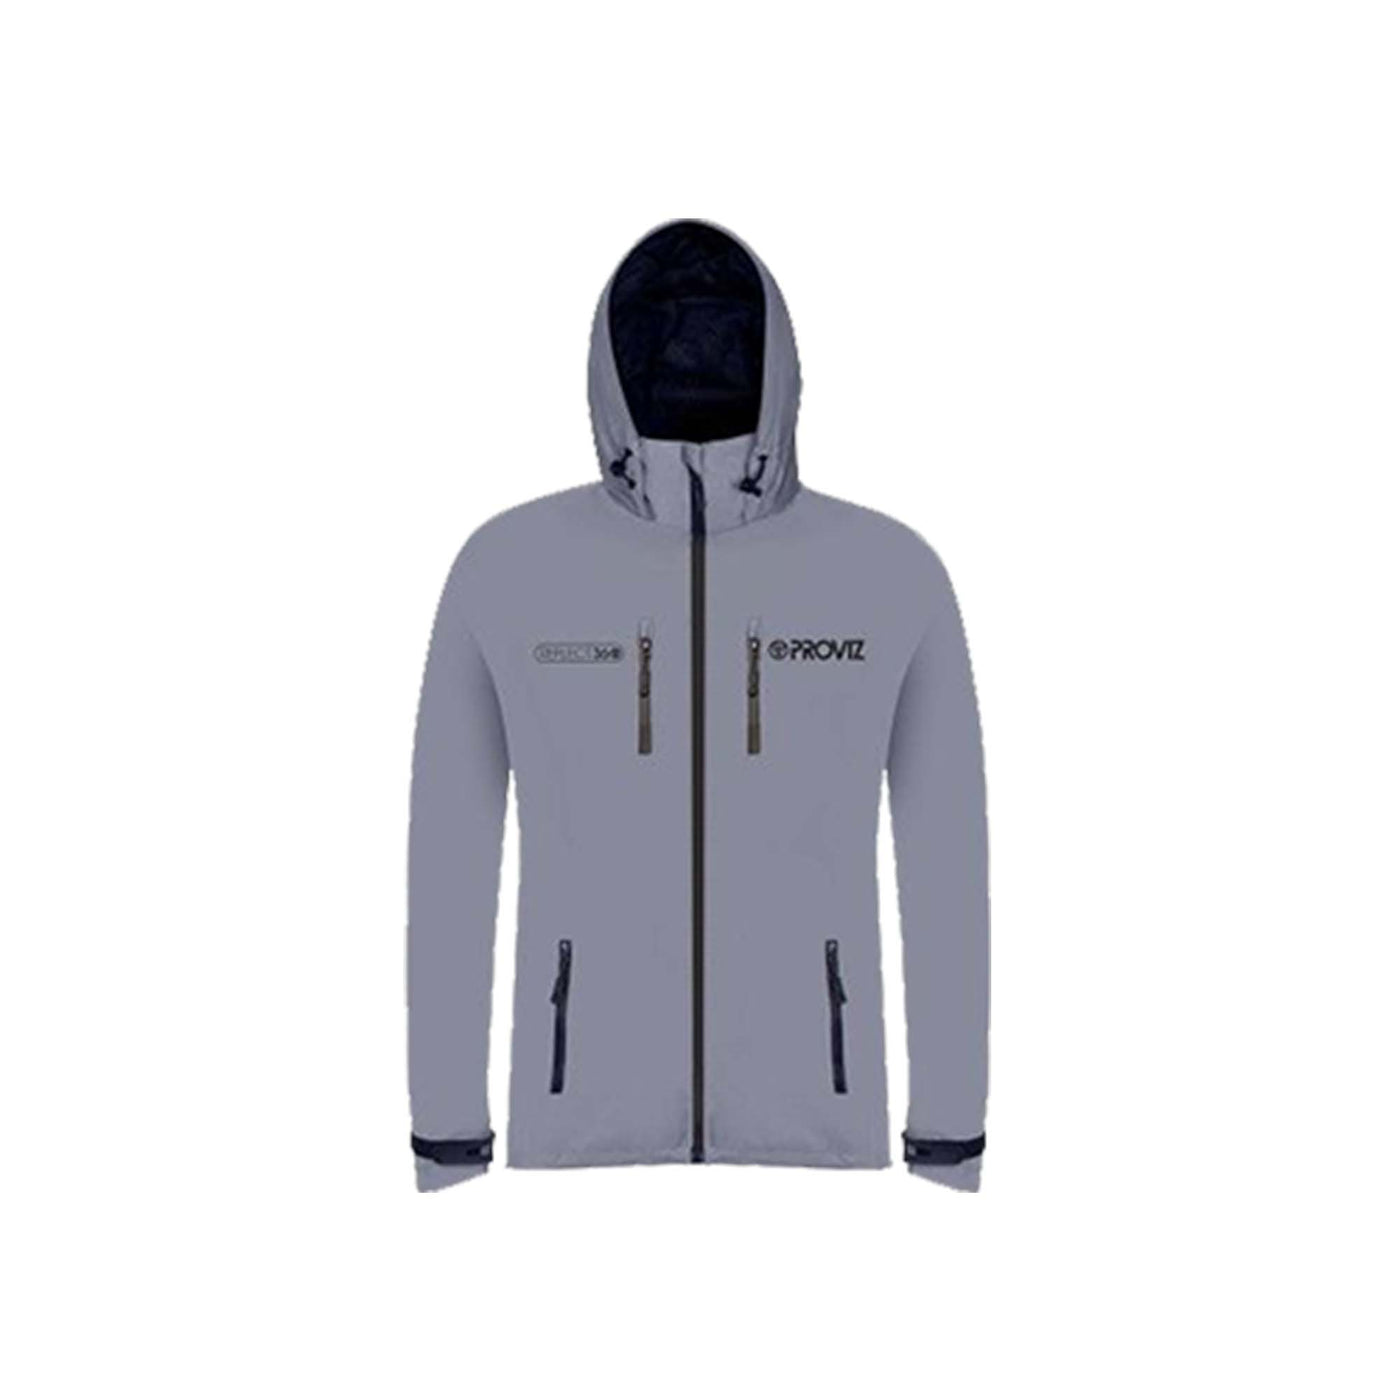 Proviz REFLECT360 outdoor jacket. Fully reflective cycling jacket with hood.